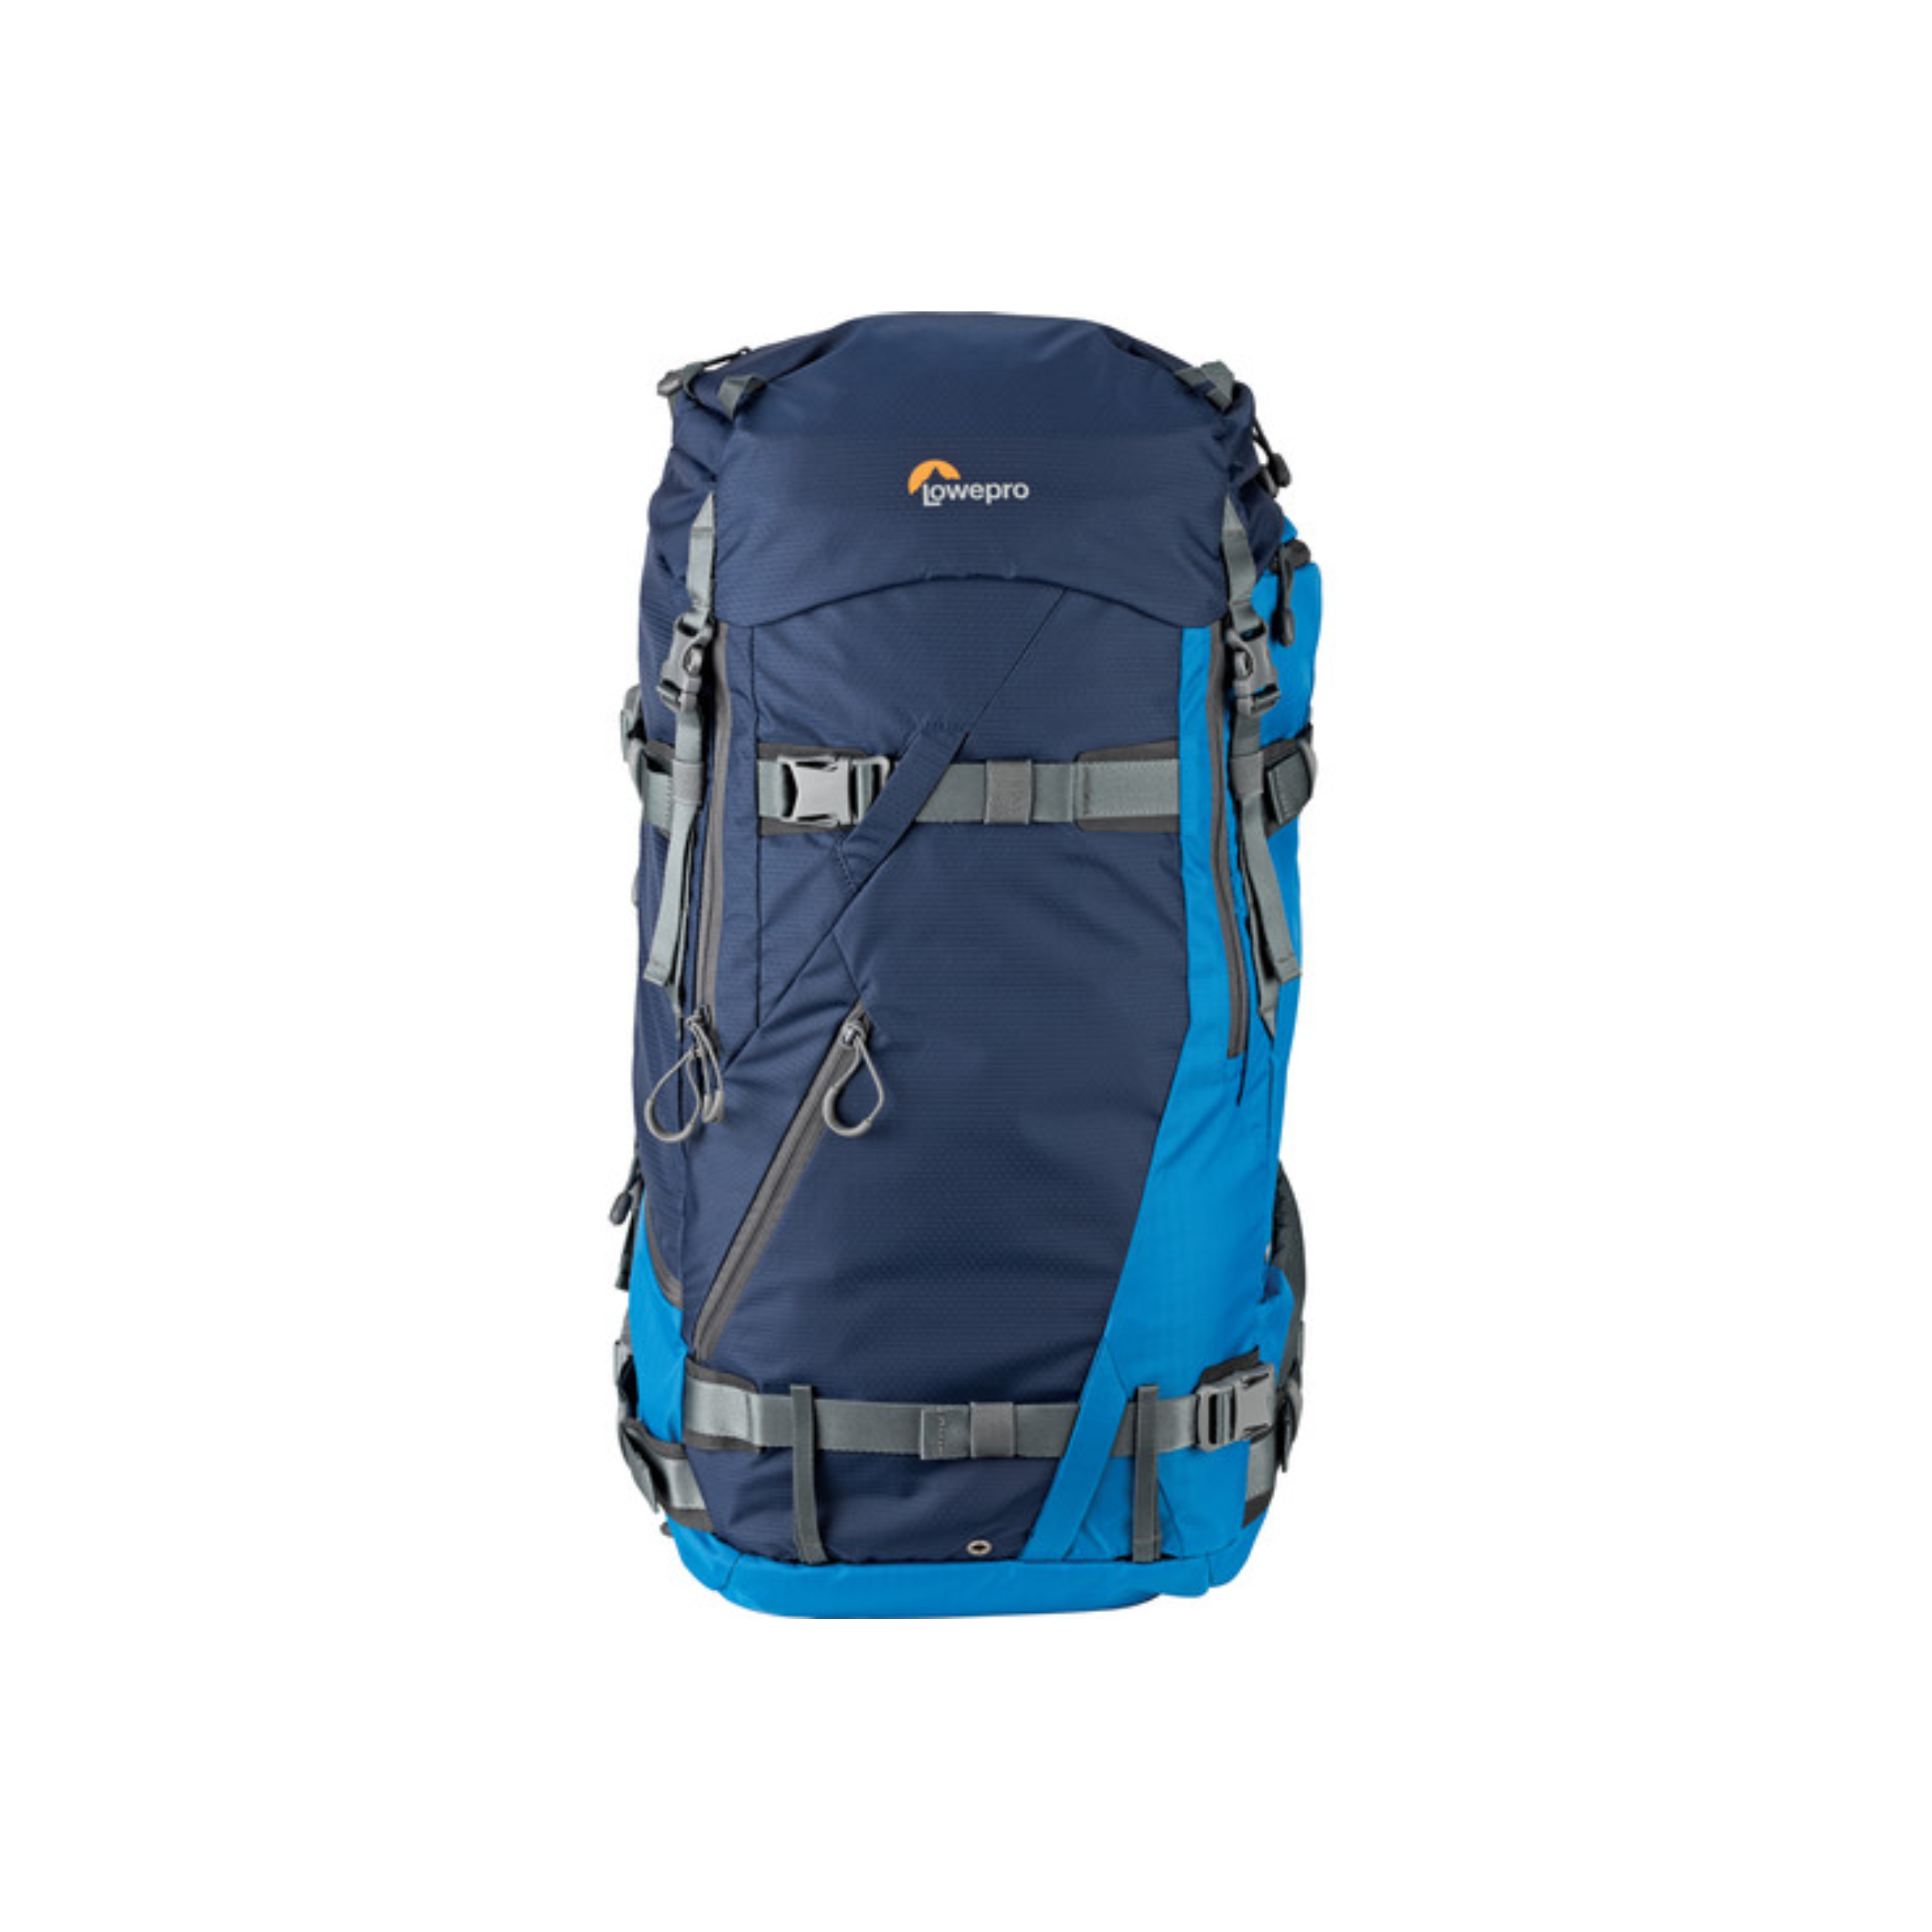 Lowepro LP37231 Powder Backpack 500 AW - minuit et bleu horizon)